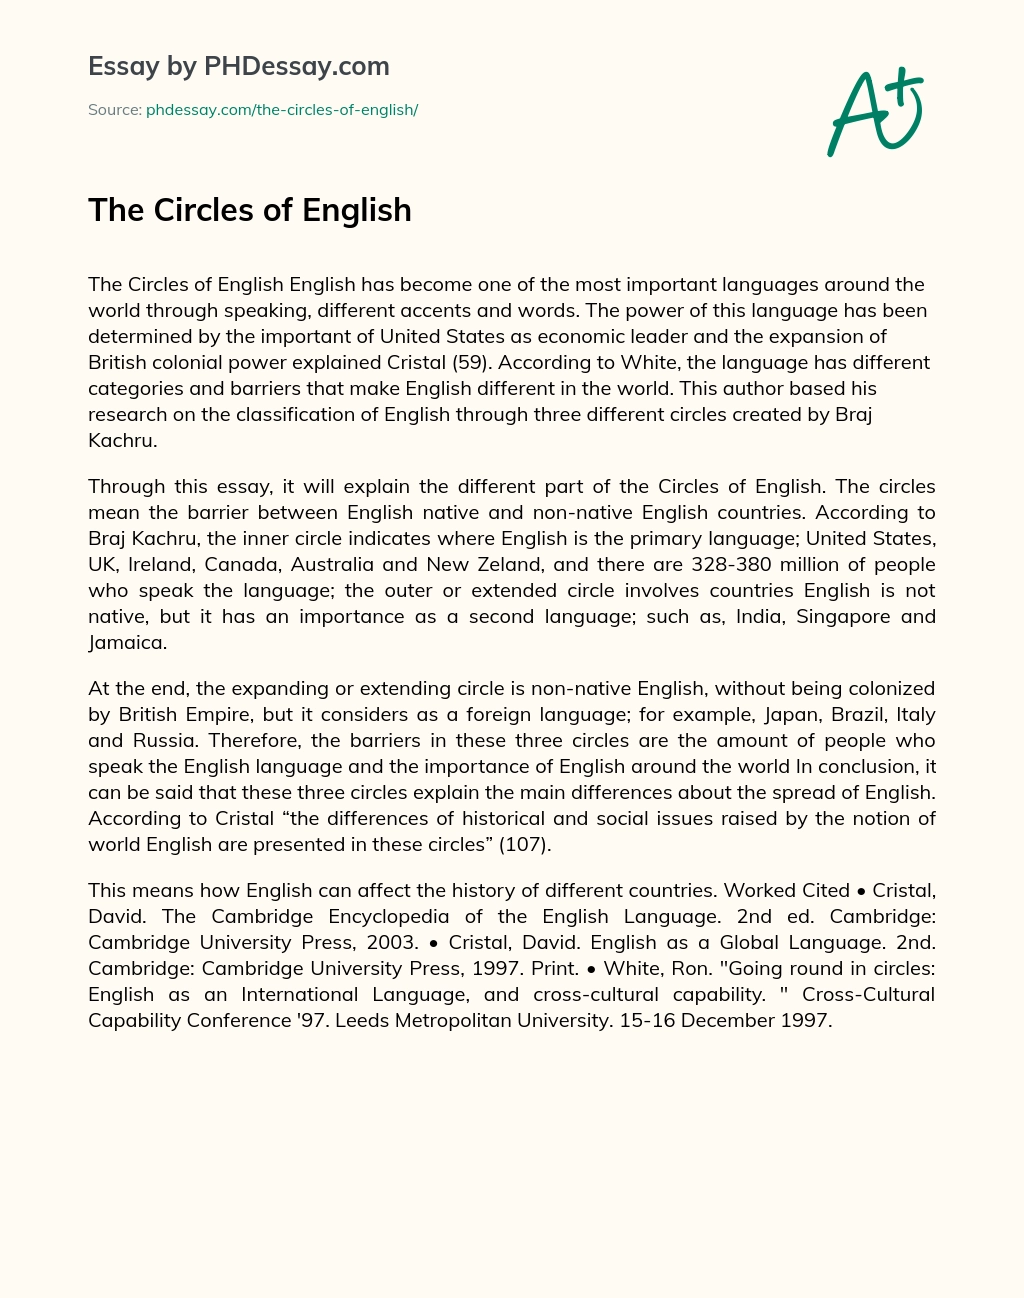 The Circles of English essay